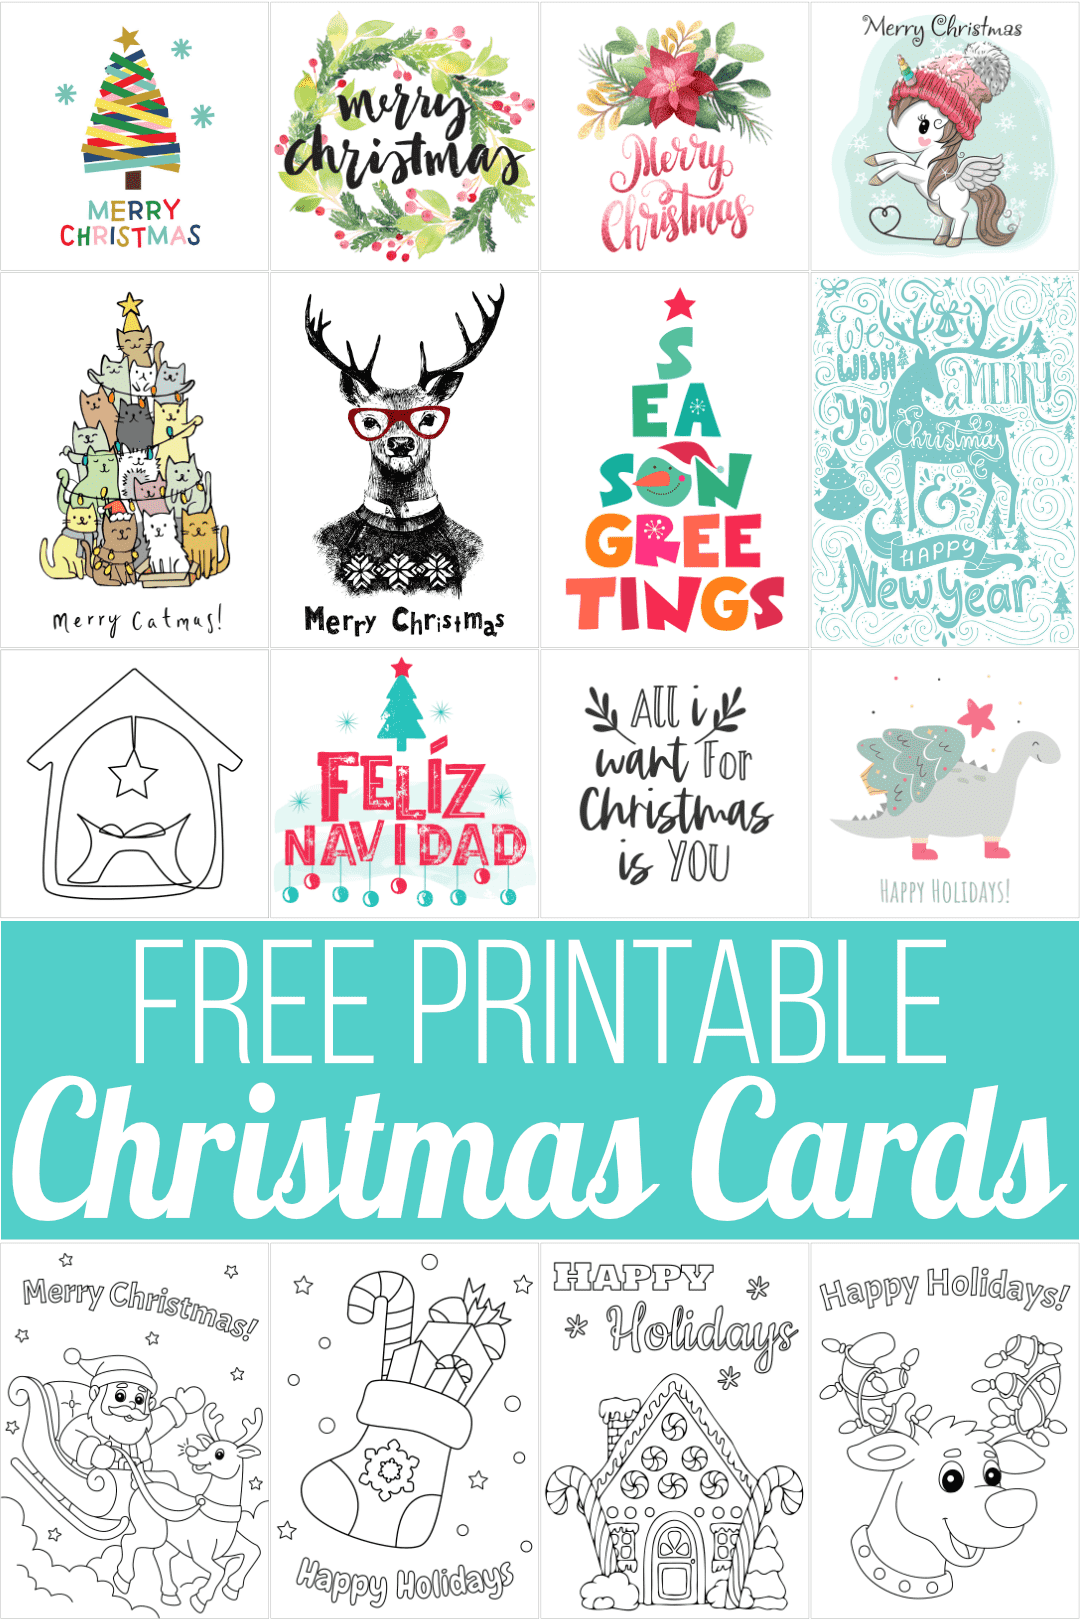 free printable christmas cards - 100+ designs